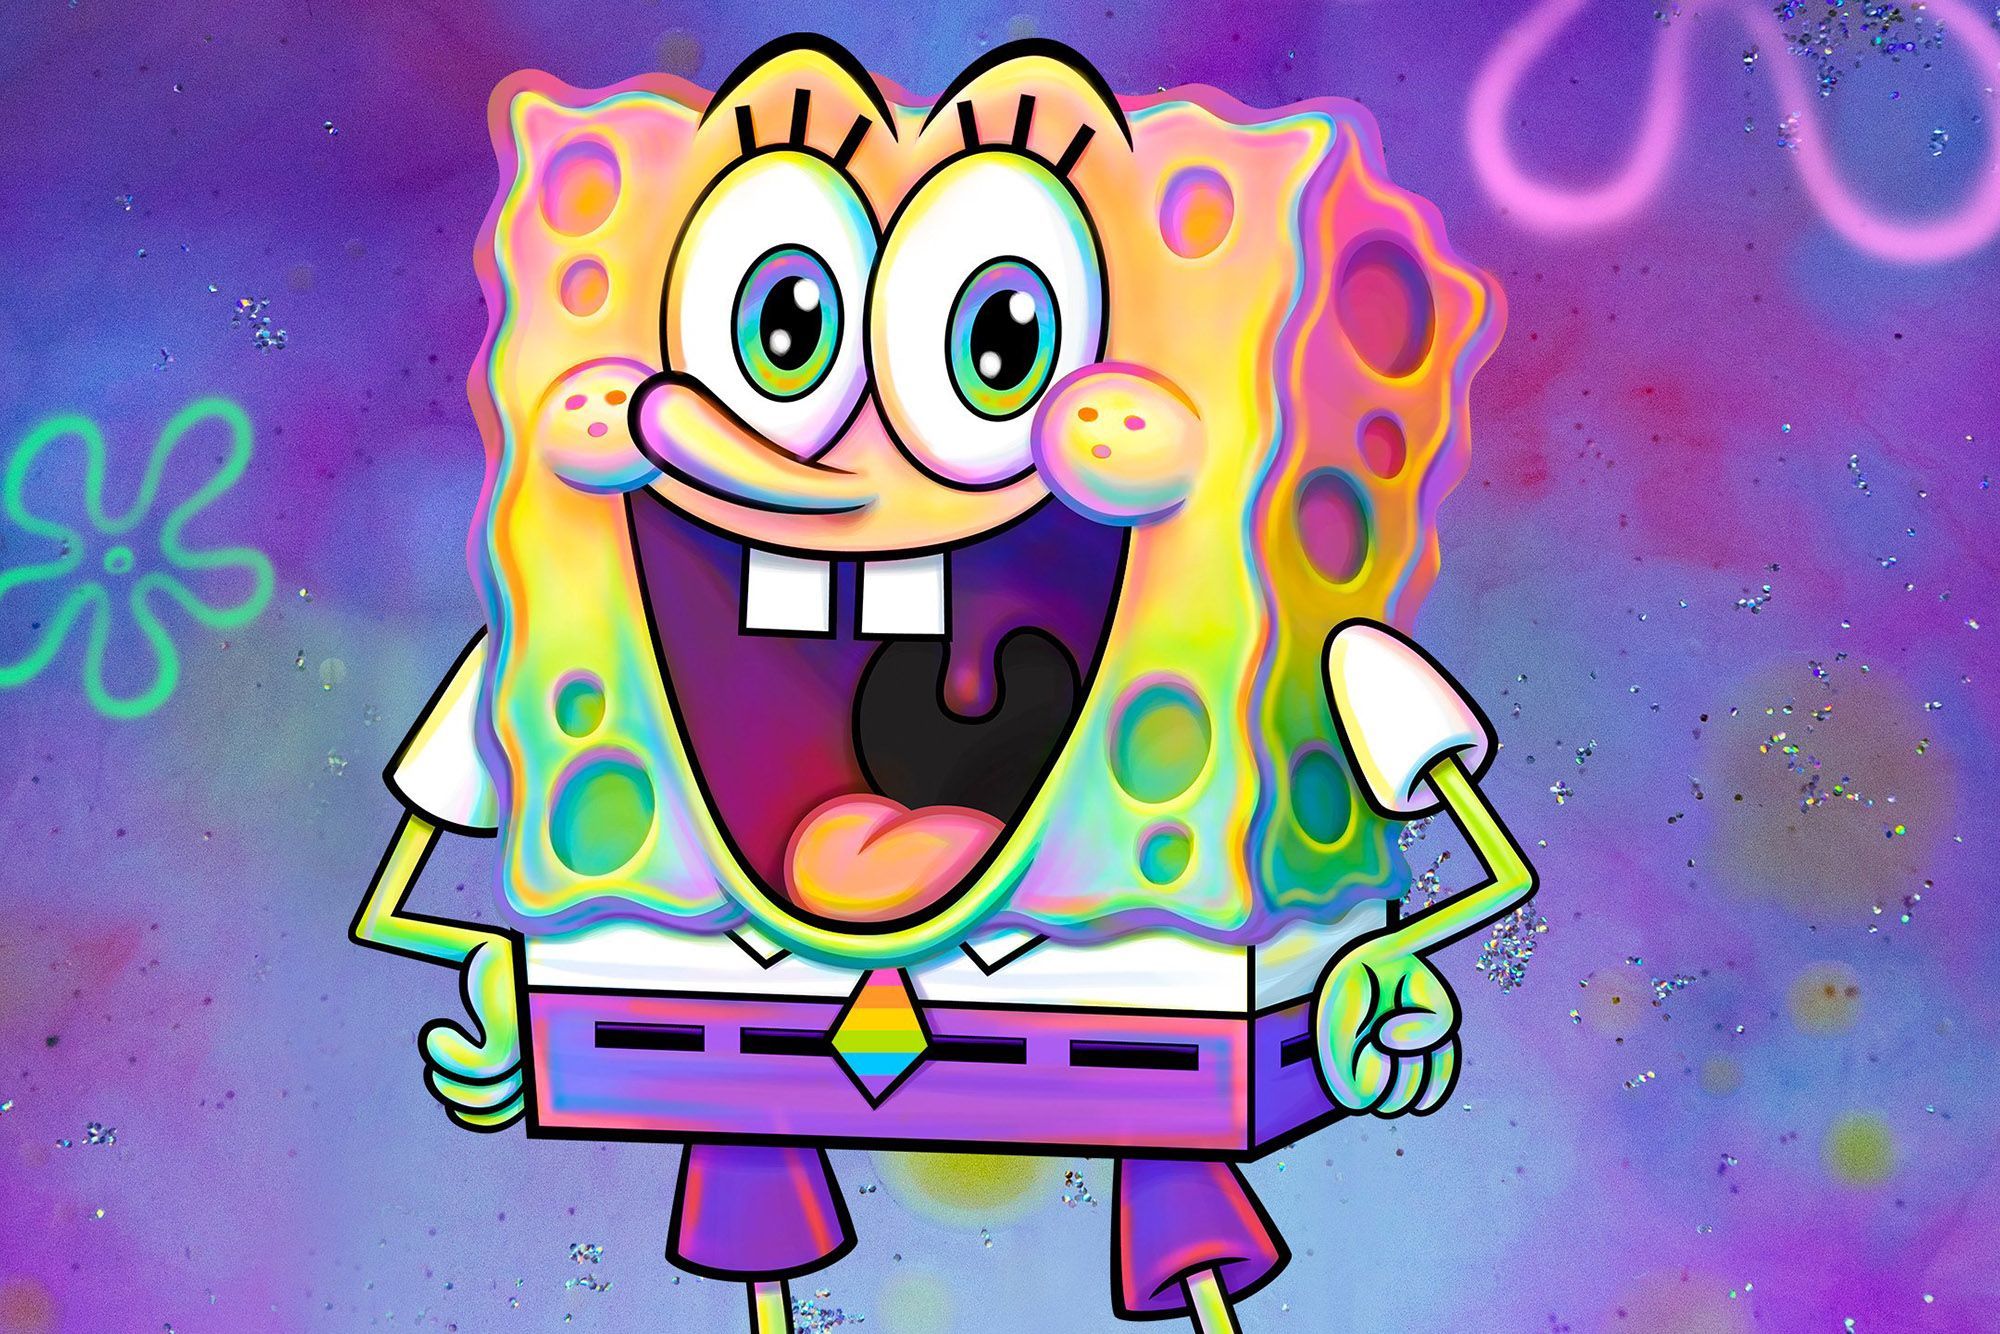 SpongeBob SquarePants is Gay, Nickelodeon Confirms